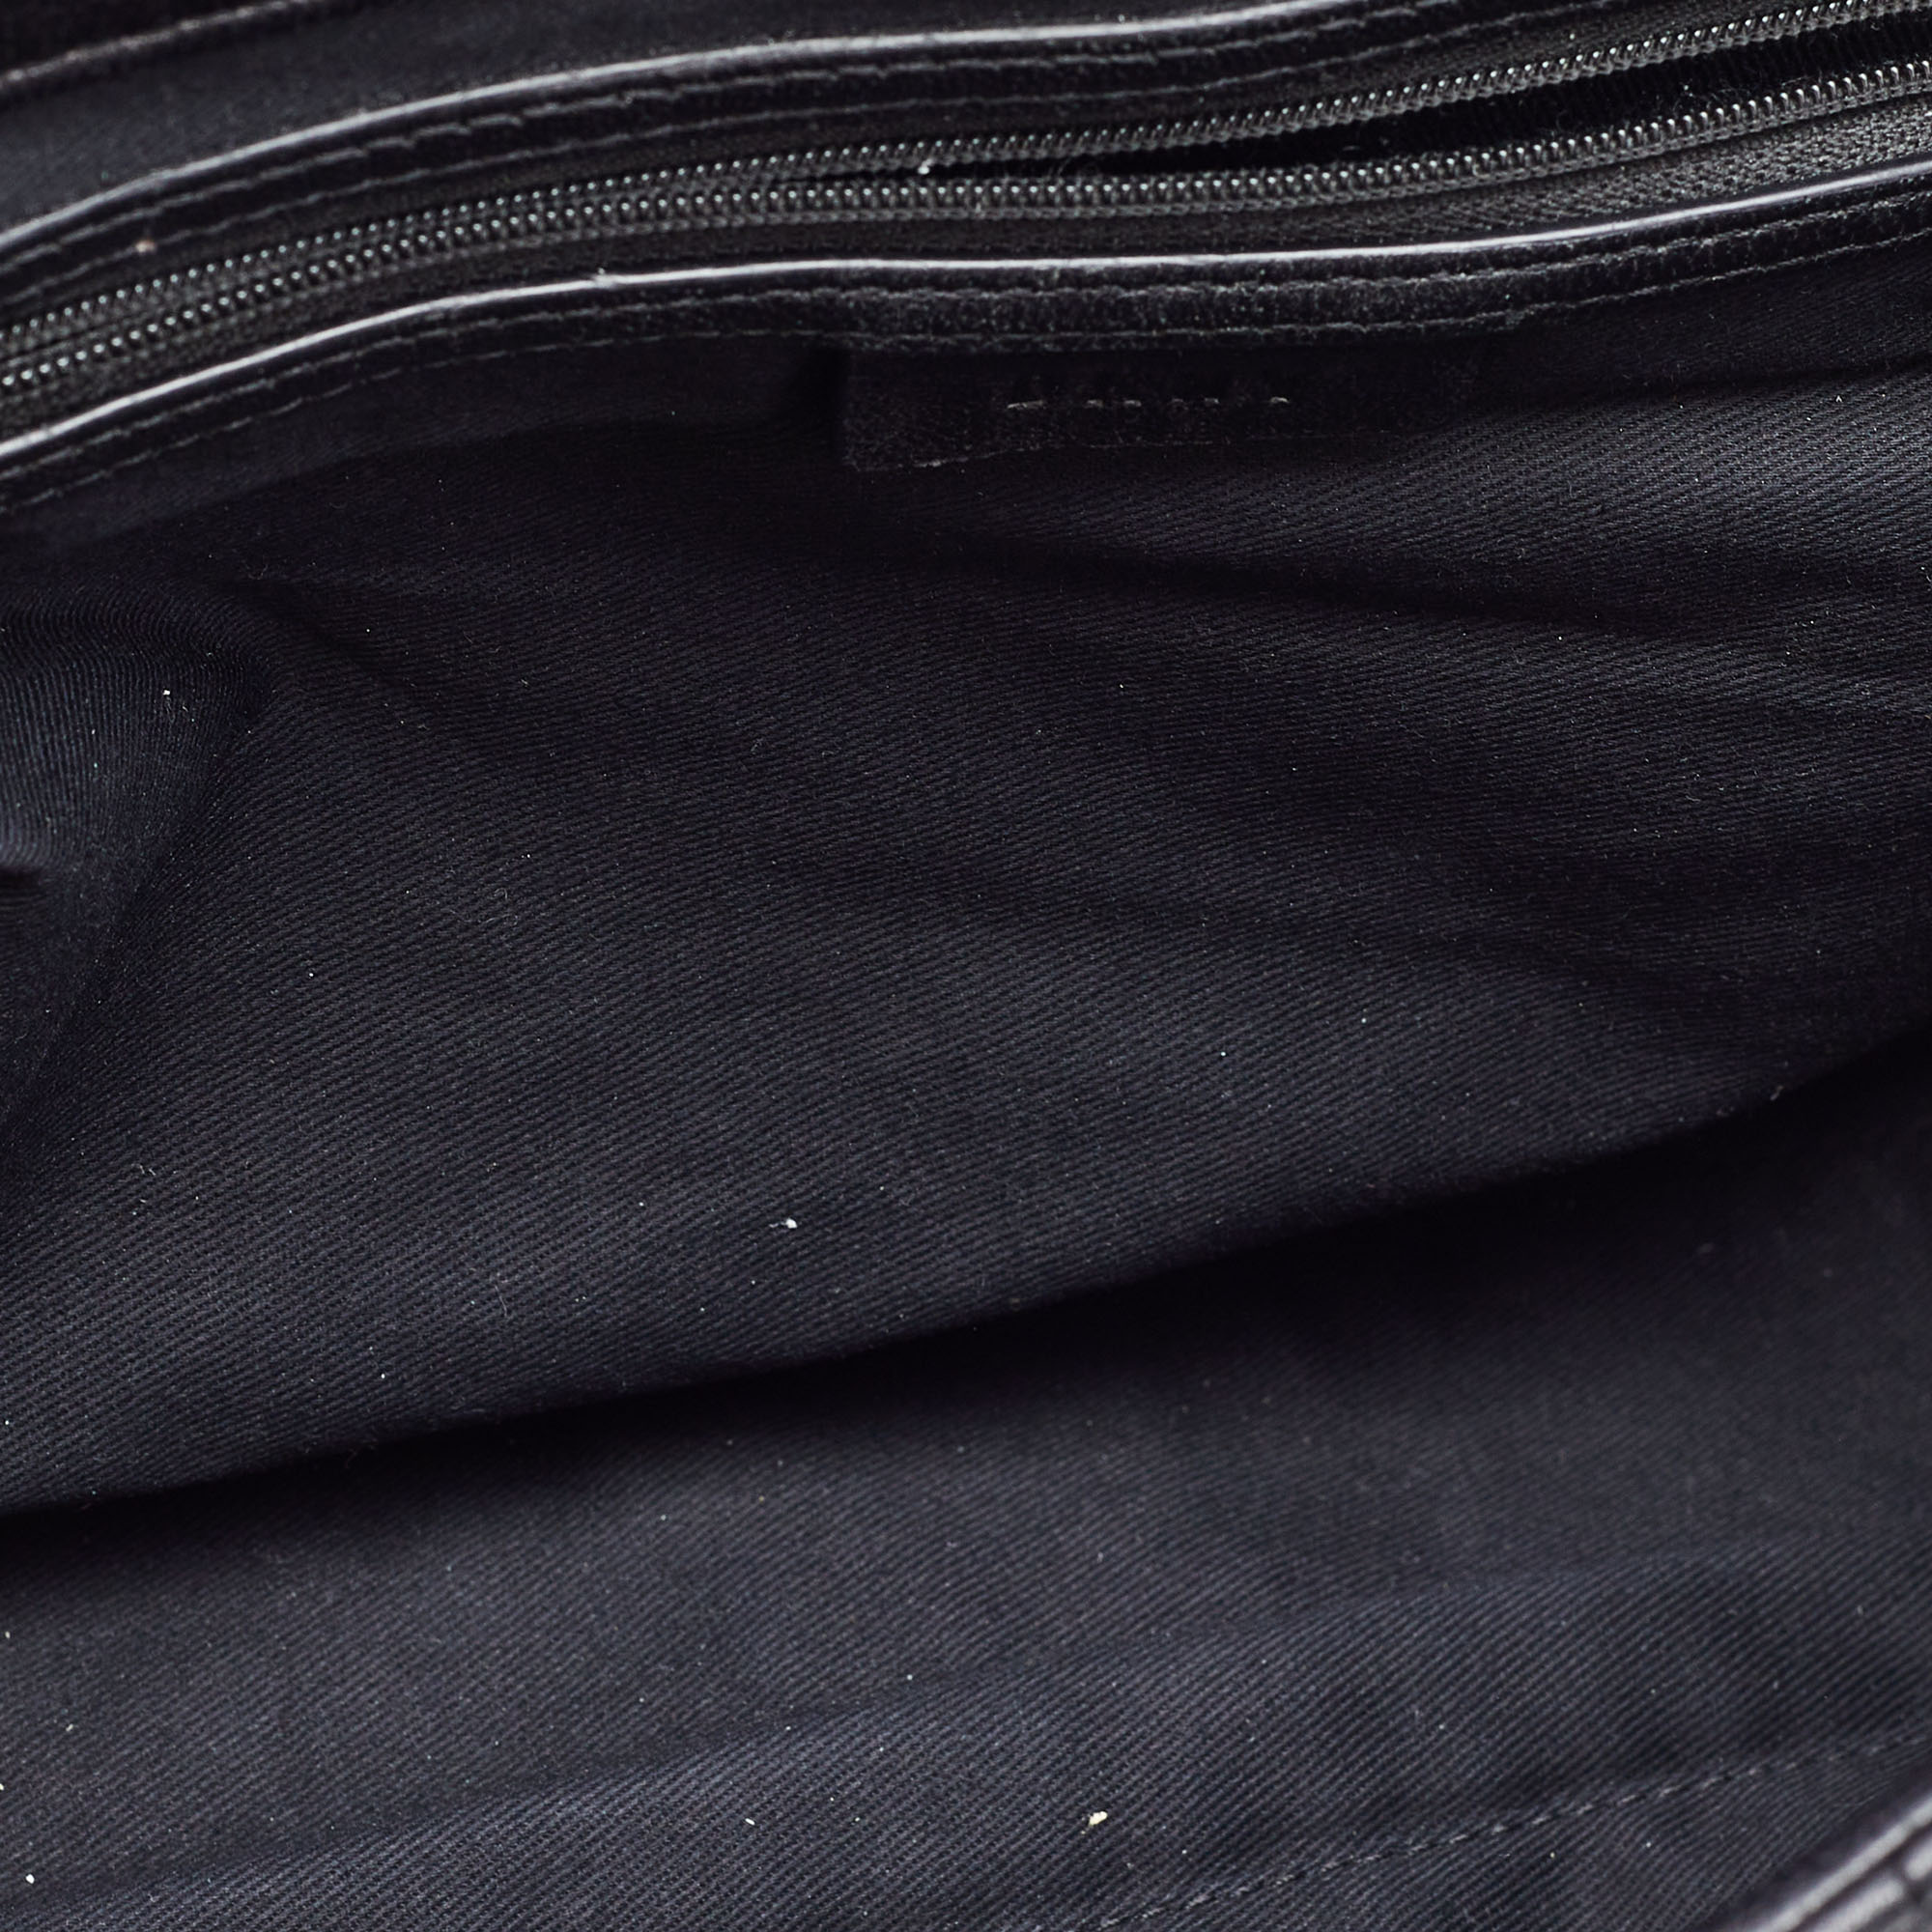 DKNY Black Quilted Leather Gansevoort Flap Top Handle Bag